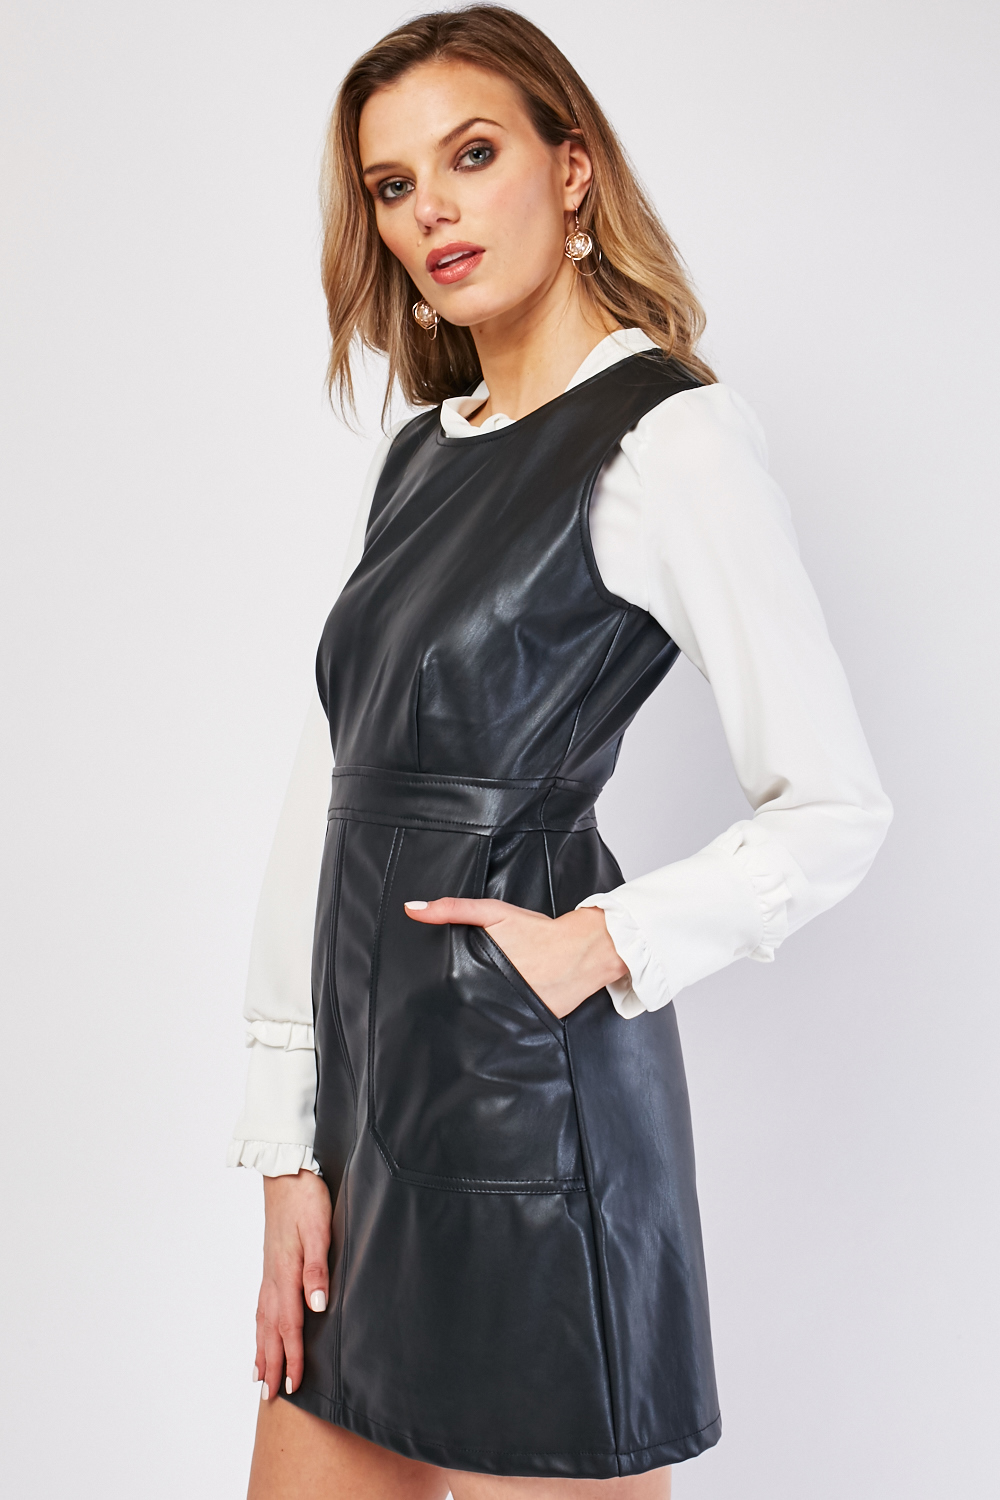 Sleeveless Mini Faux Leather Dress - Black - Just $6